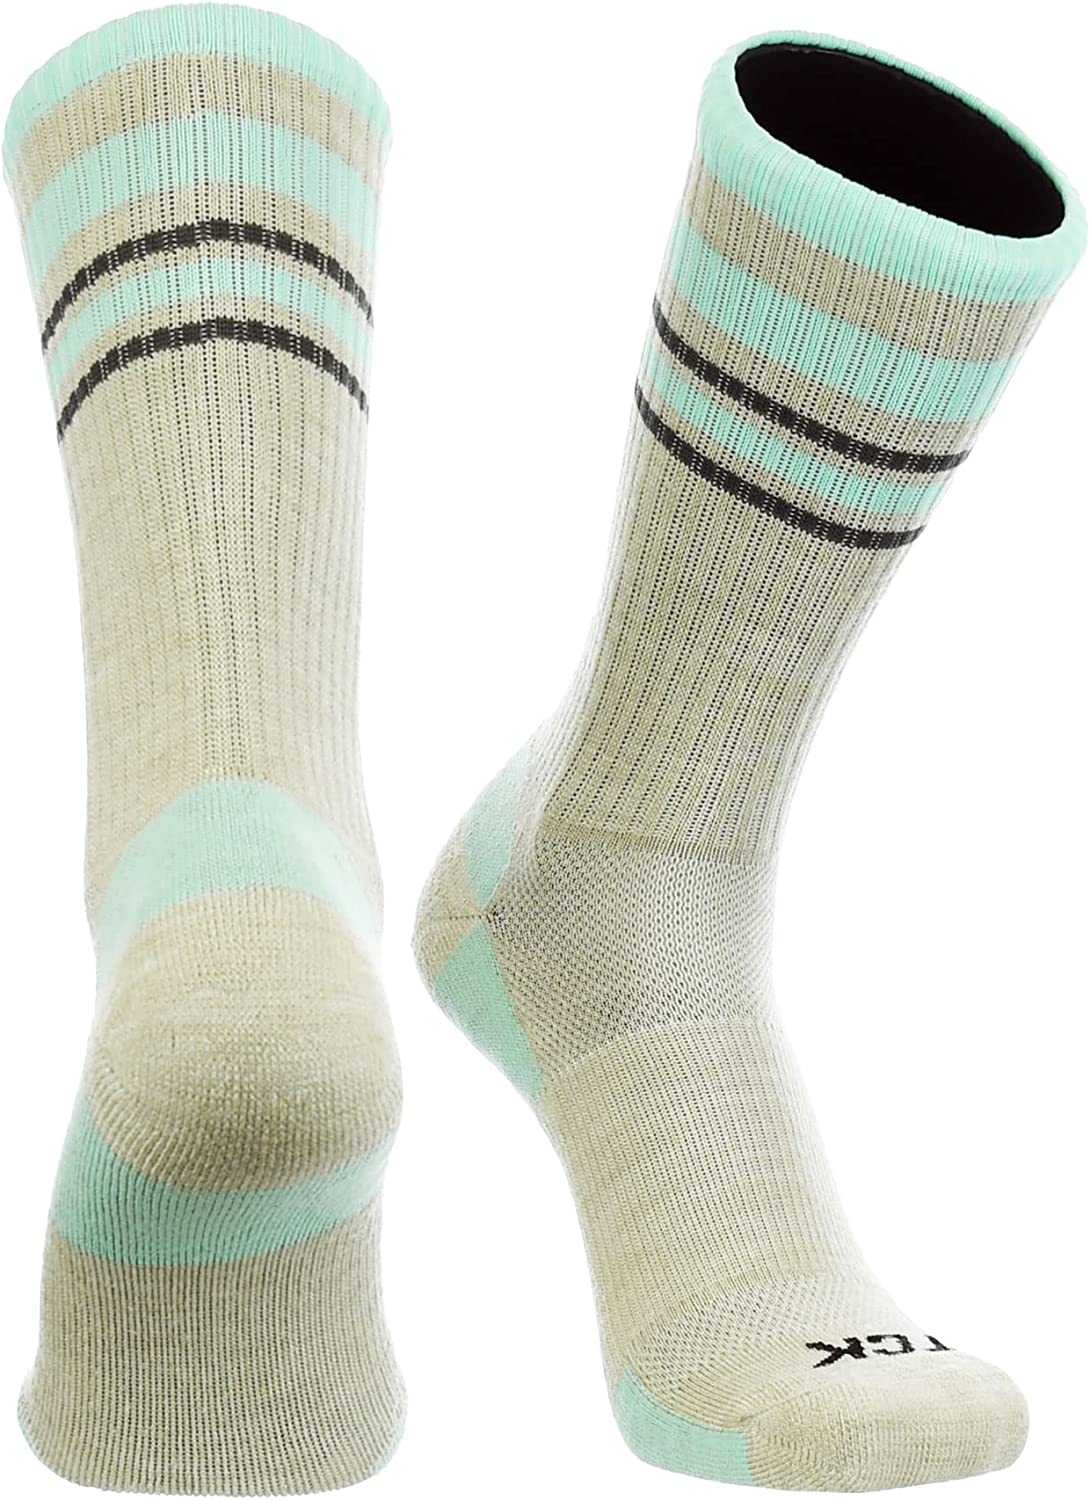 TCK Merino Wool Crew Socks - Oatmeal Mint Graphite Stripe